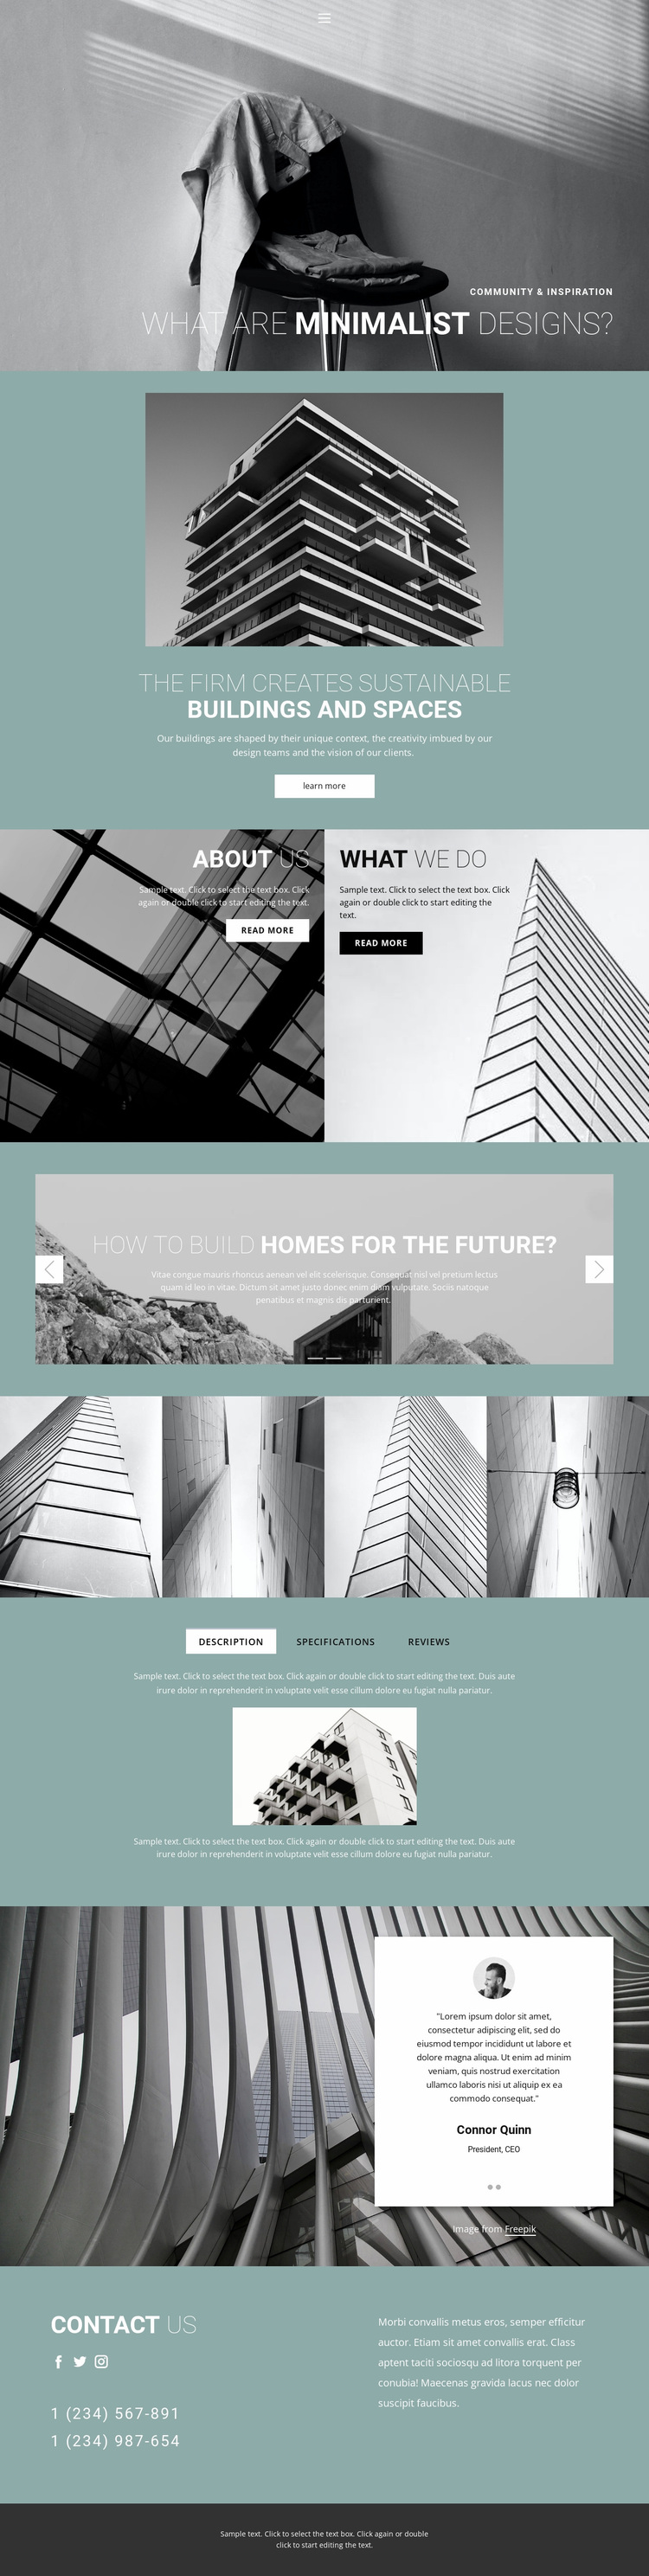 Perfect architecture ideas Website Design